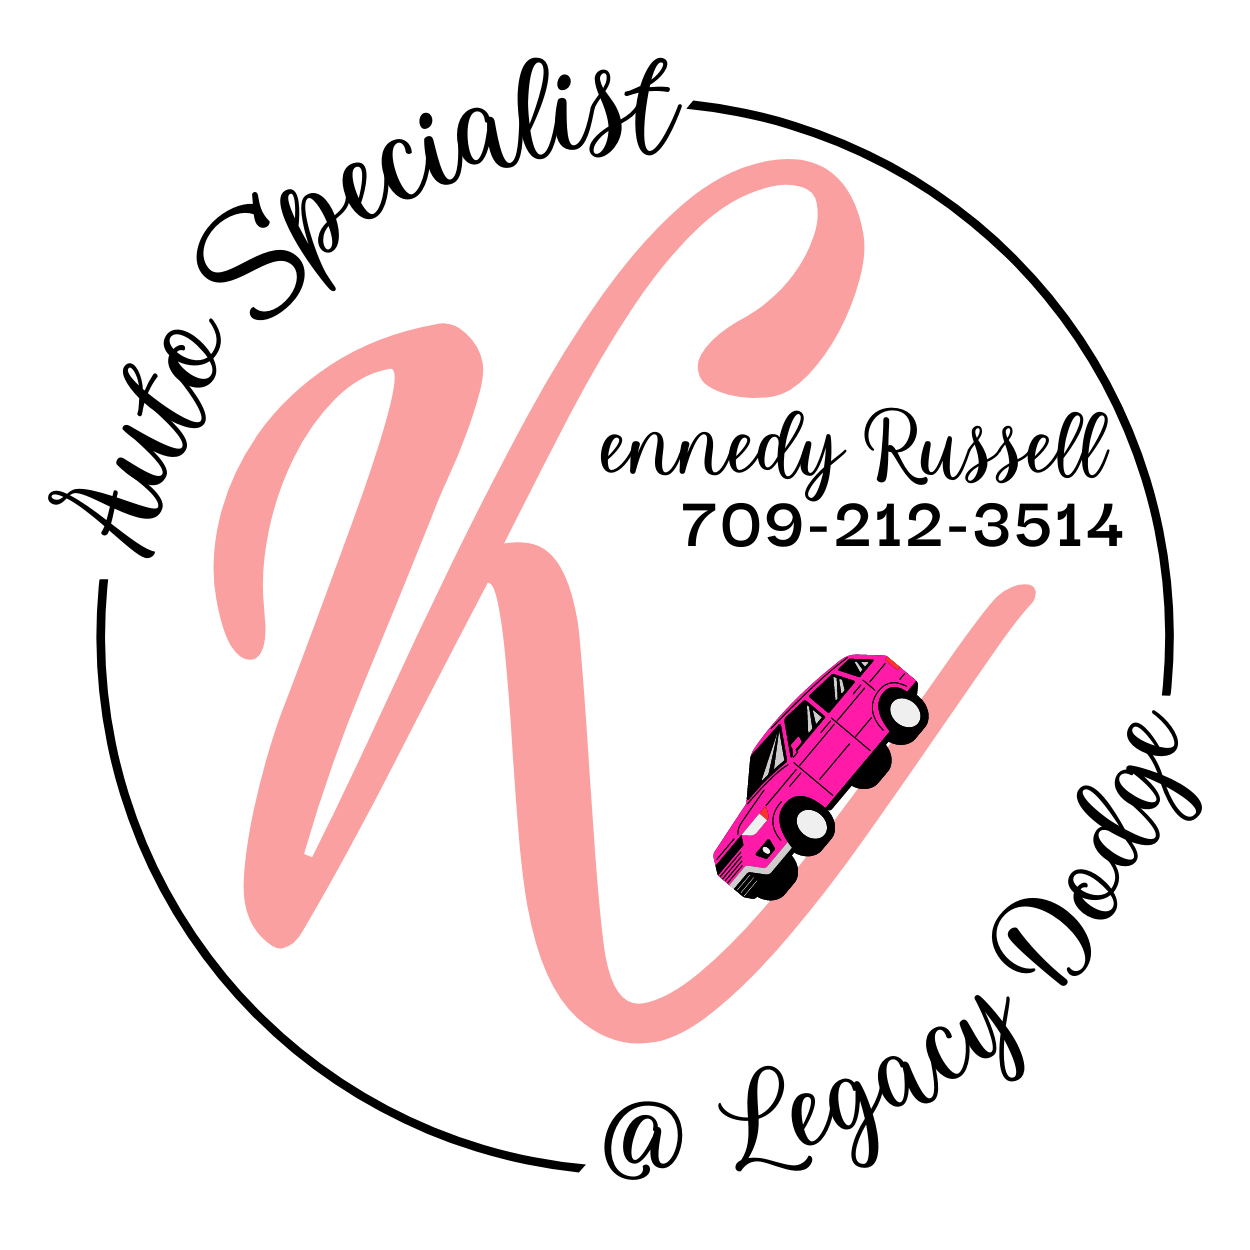 Kennedy Russell Logo